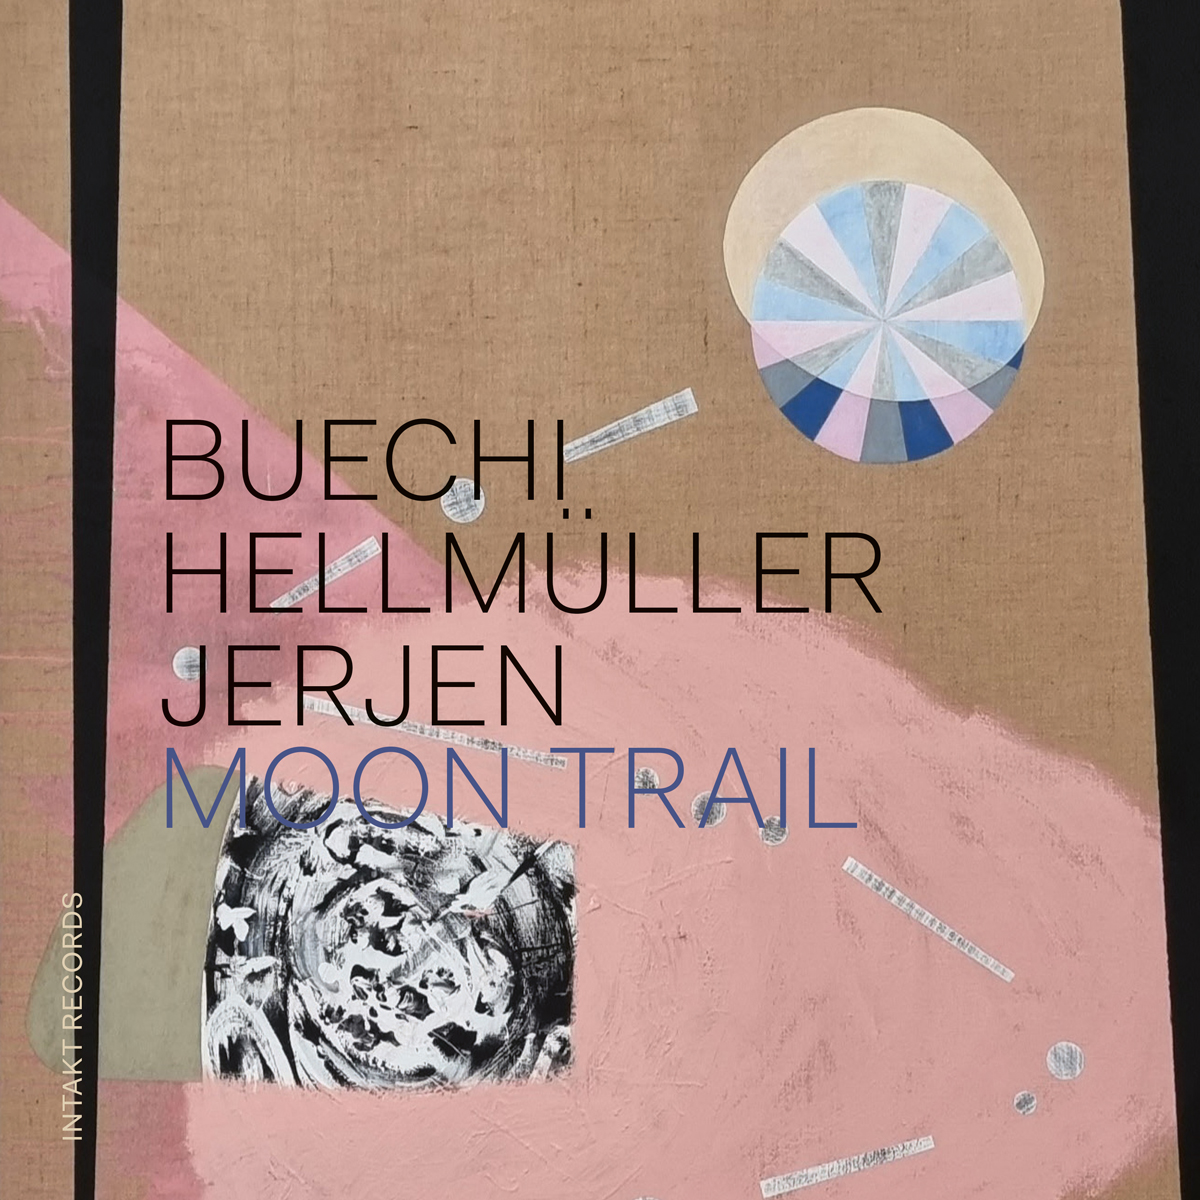 BUECHI – HELLMÜLLER – JERJEN
MOON TRAIL Intakt Records CD 390